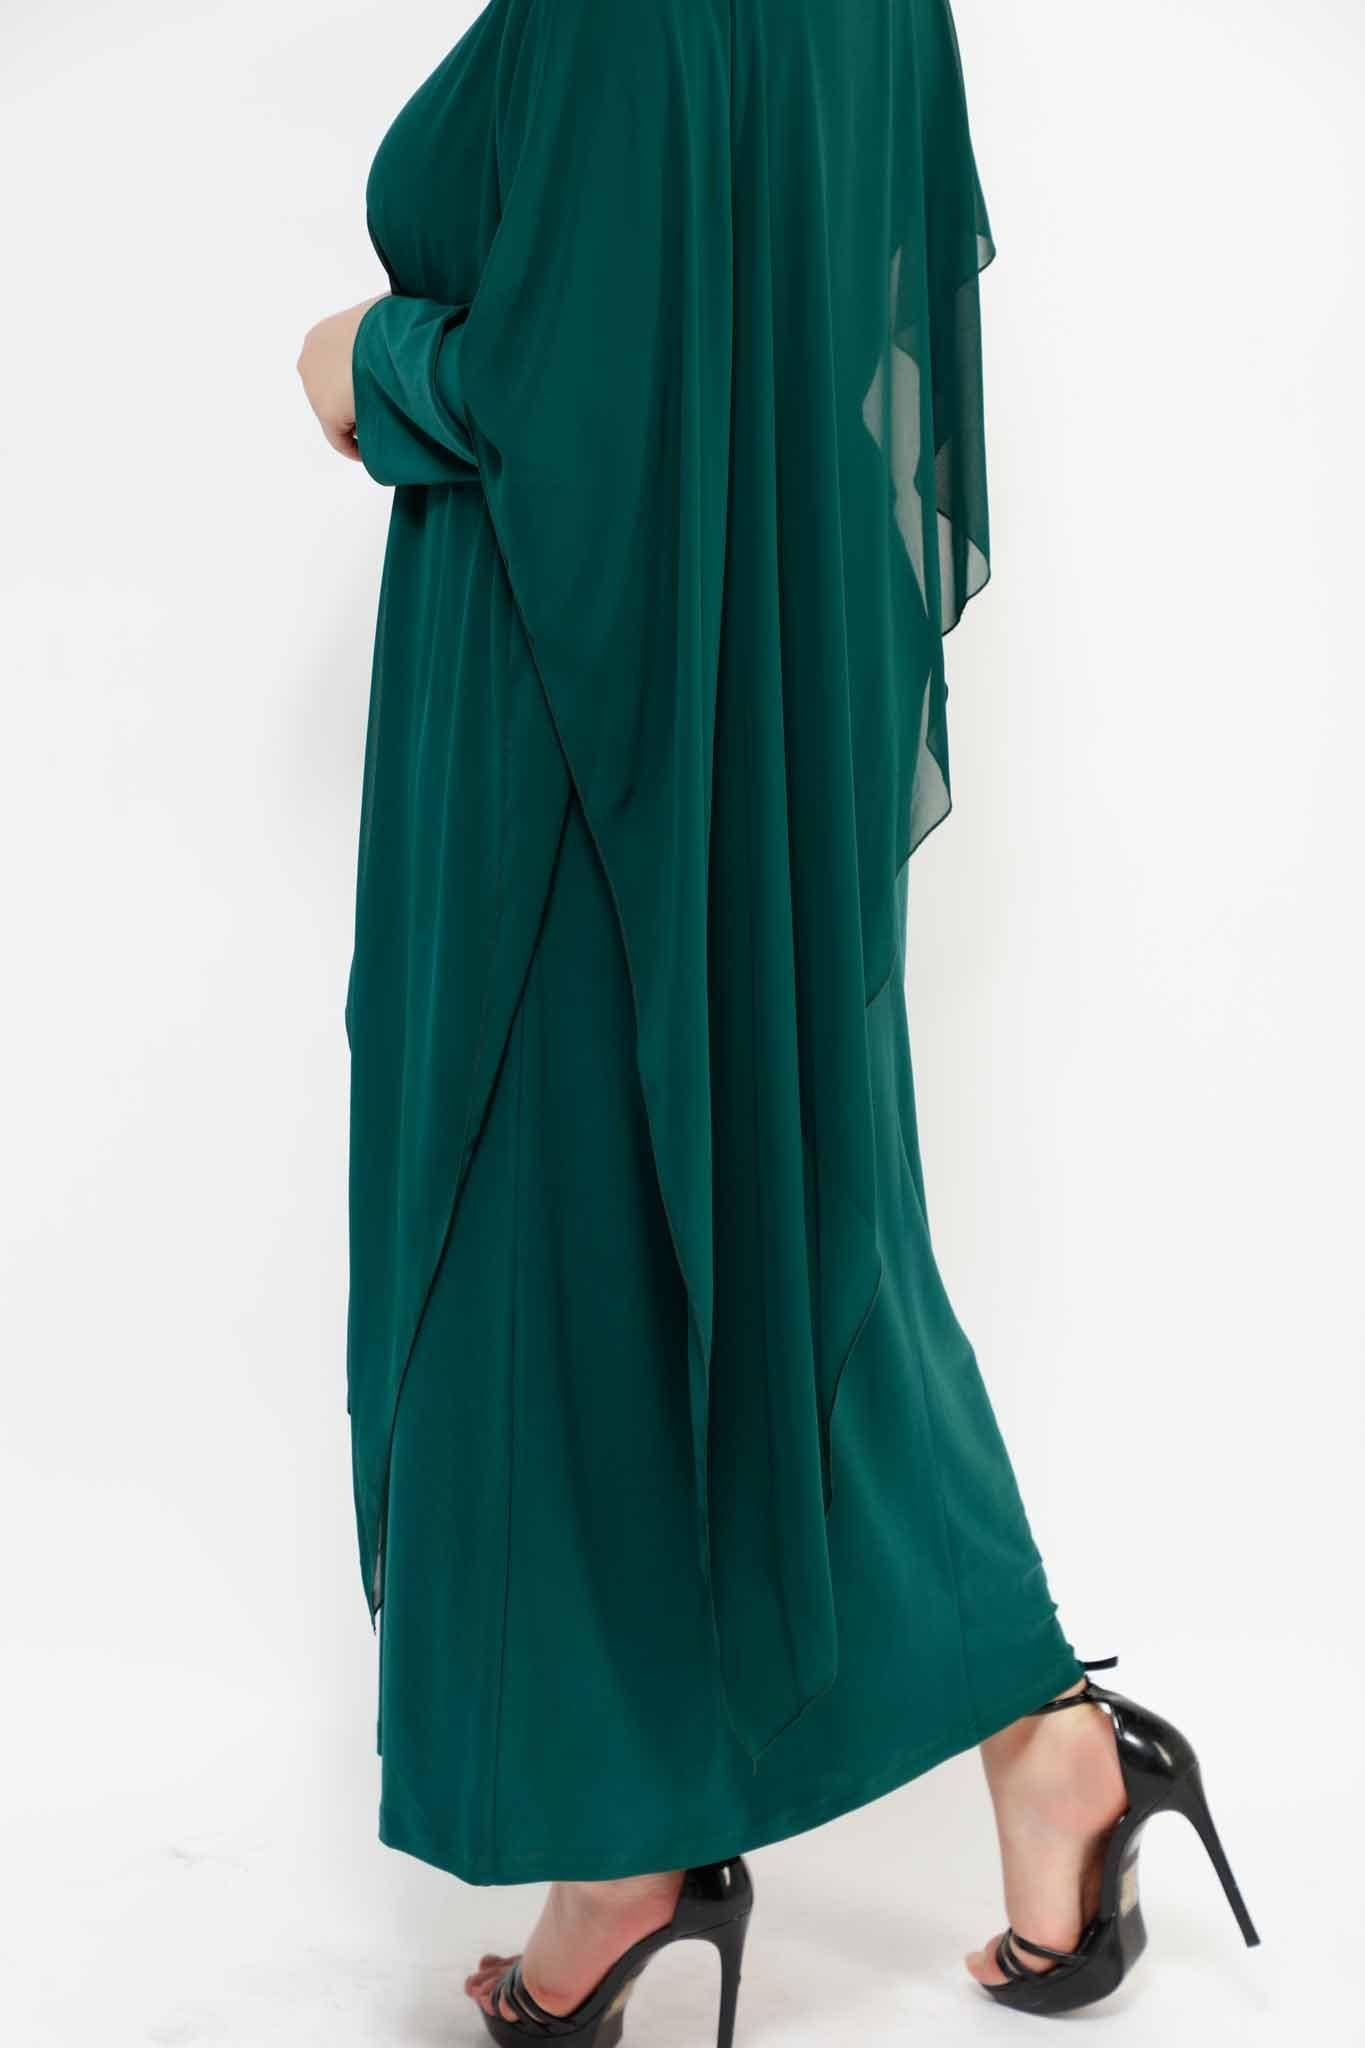 MAKKA 1 JEWELLED NECKLINE DRESS 3103, DRESS, CORADO, arabic, dress, gown, green, kaftan, long, longsleeve, women, coradomoda, coradomoda.com